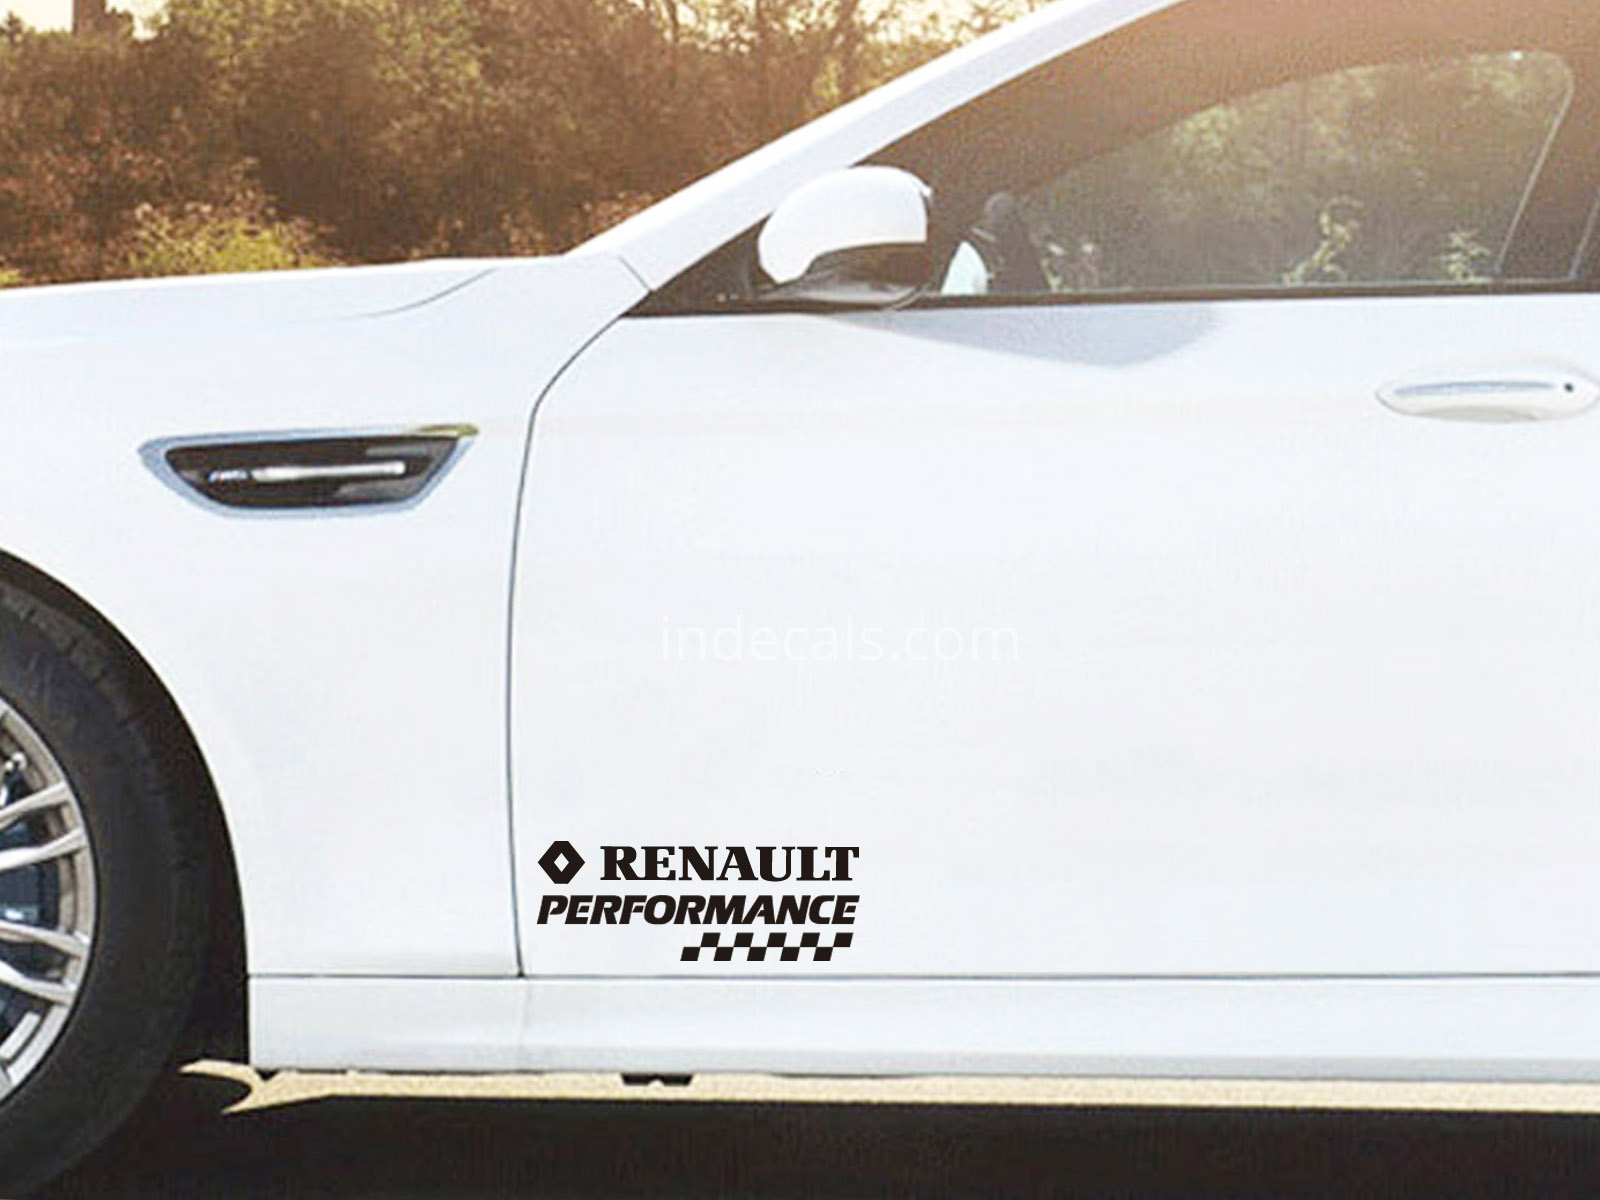 2 x Renault Performance Stickers for Doors - Black